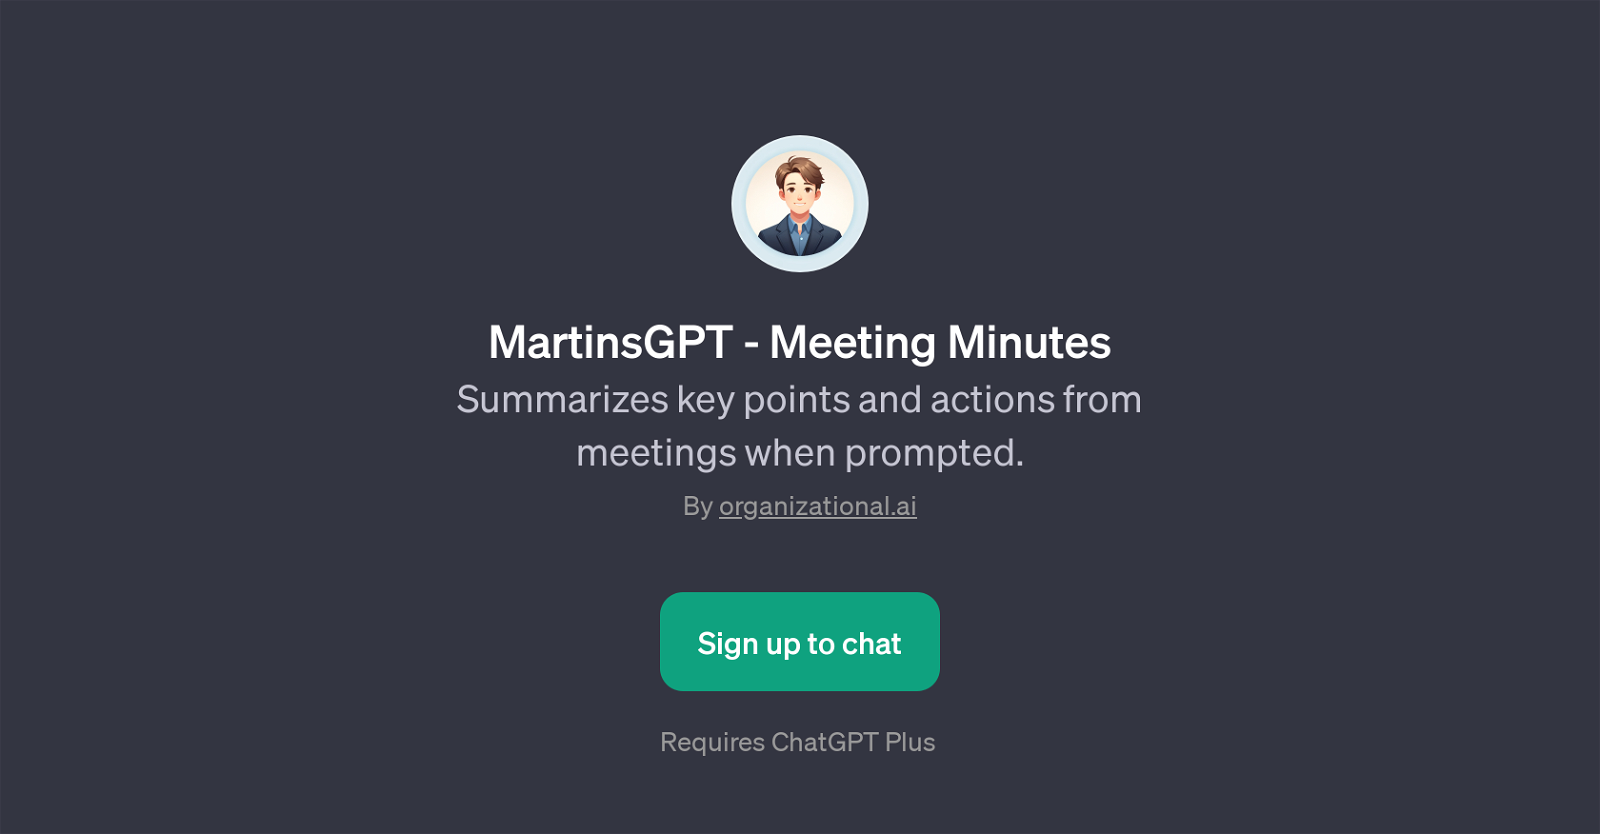 MartinsGPT - Meeting Minutes website